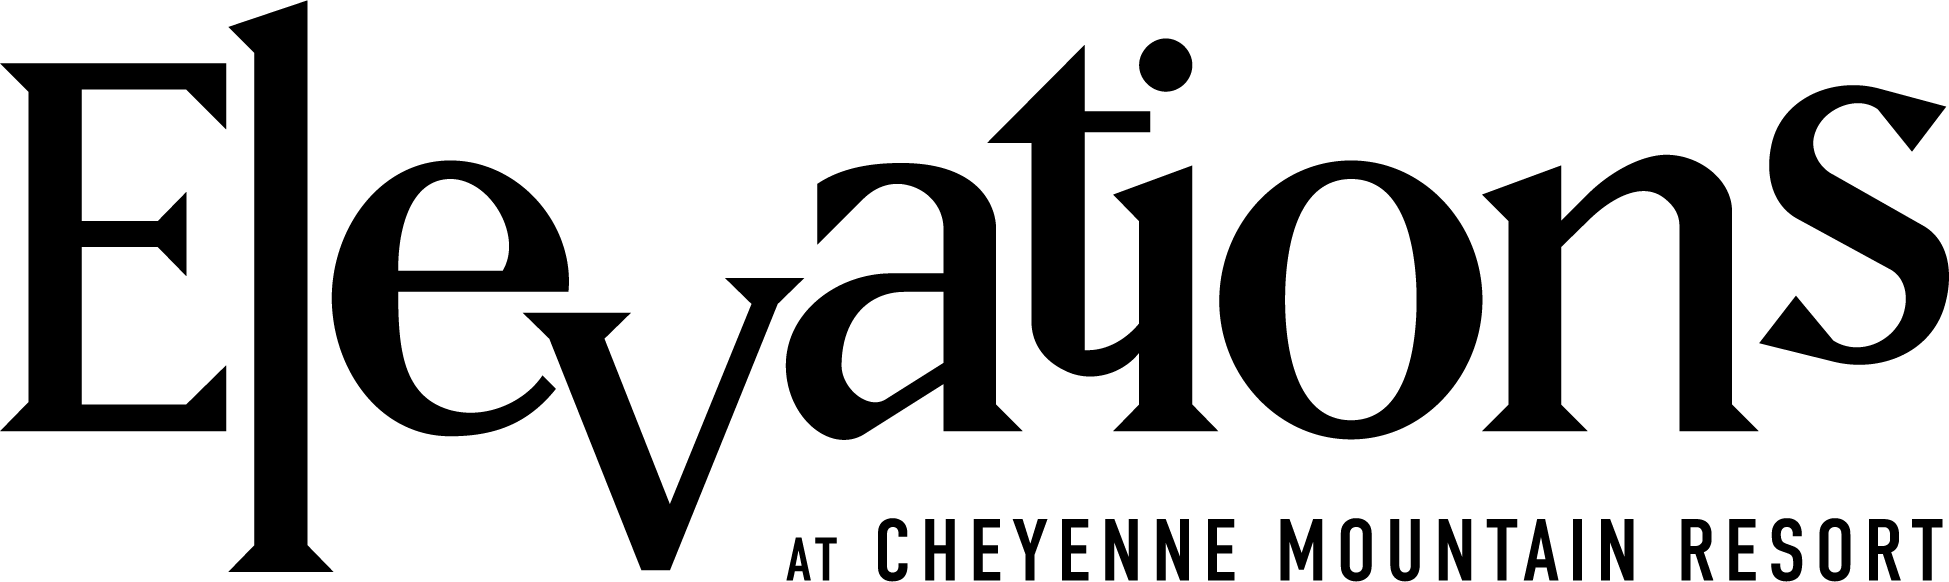 Elevations Logo